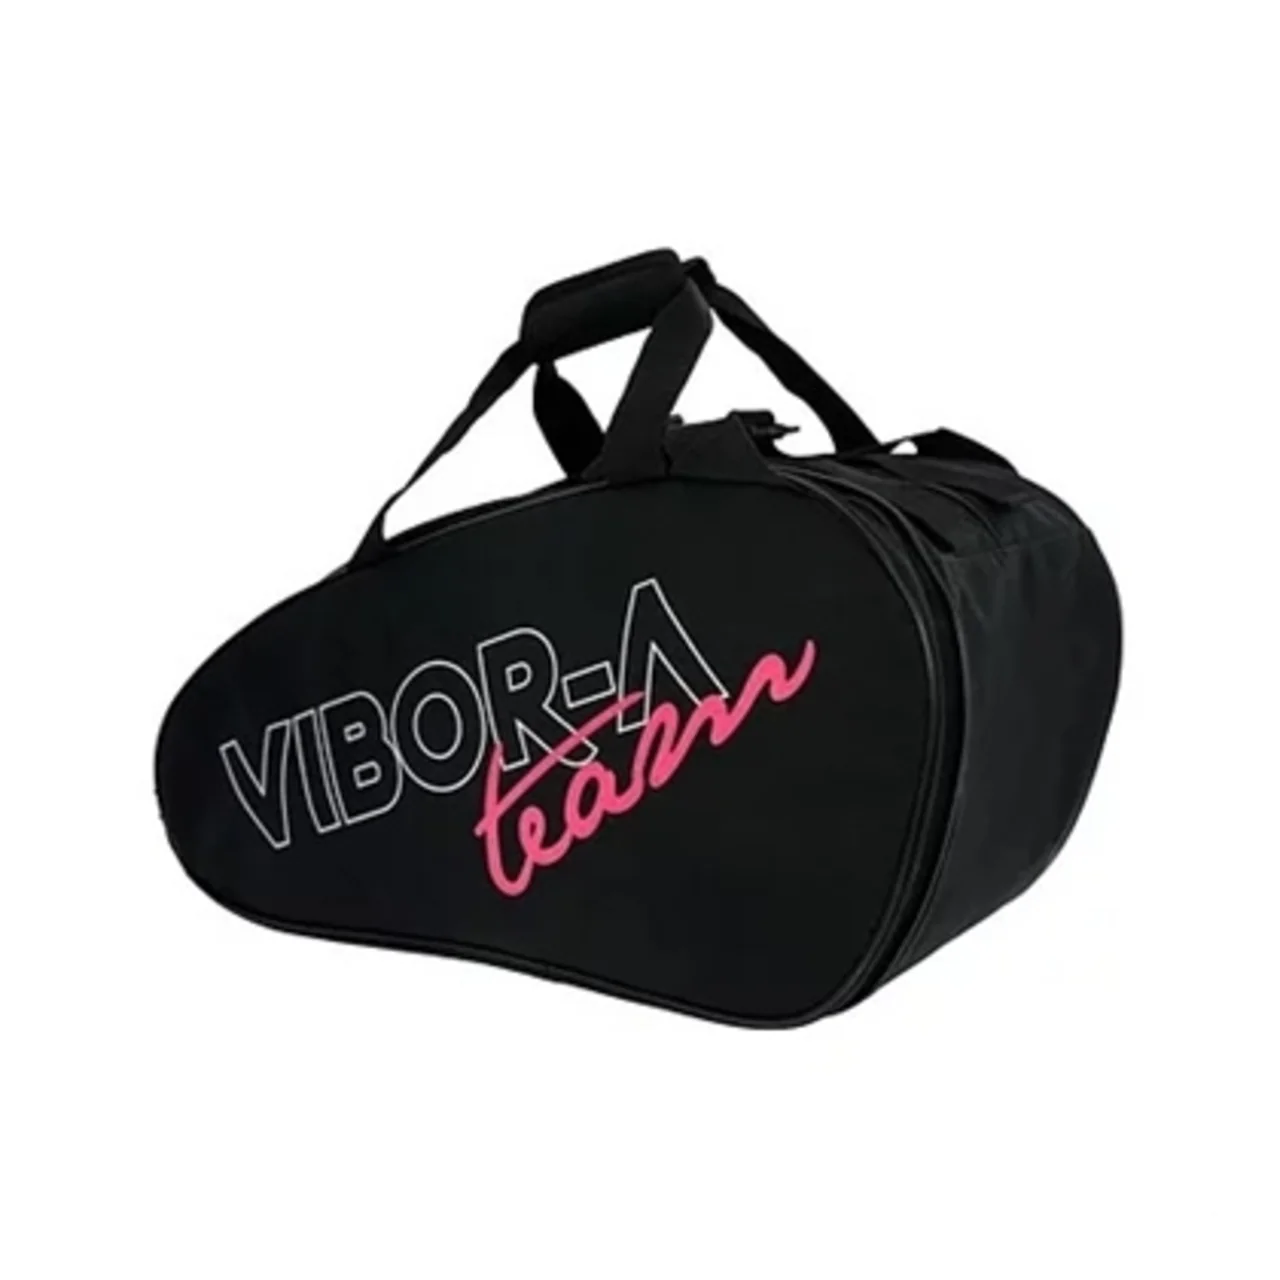 Vibor-A Racket Bag Club Pink